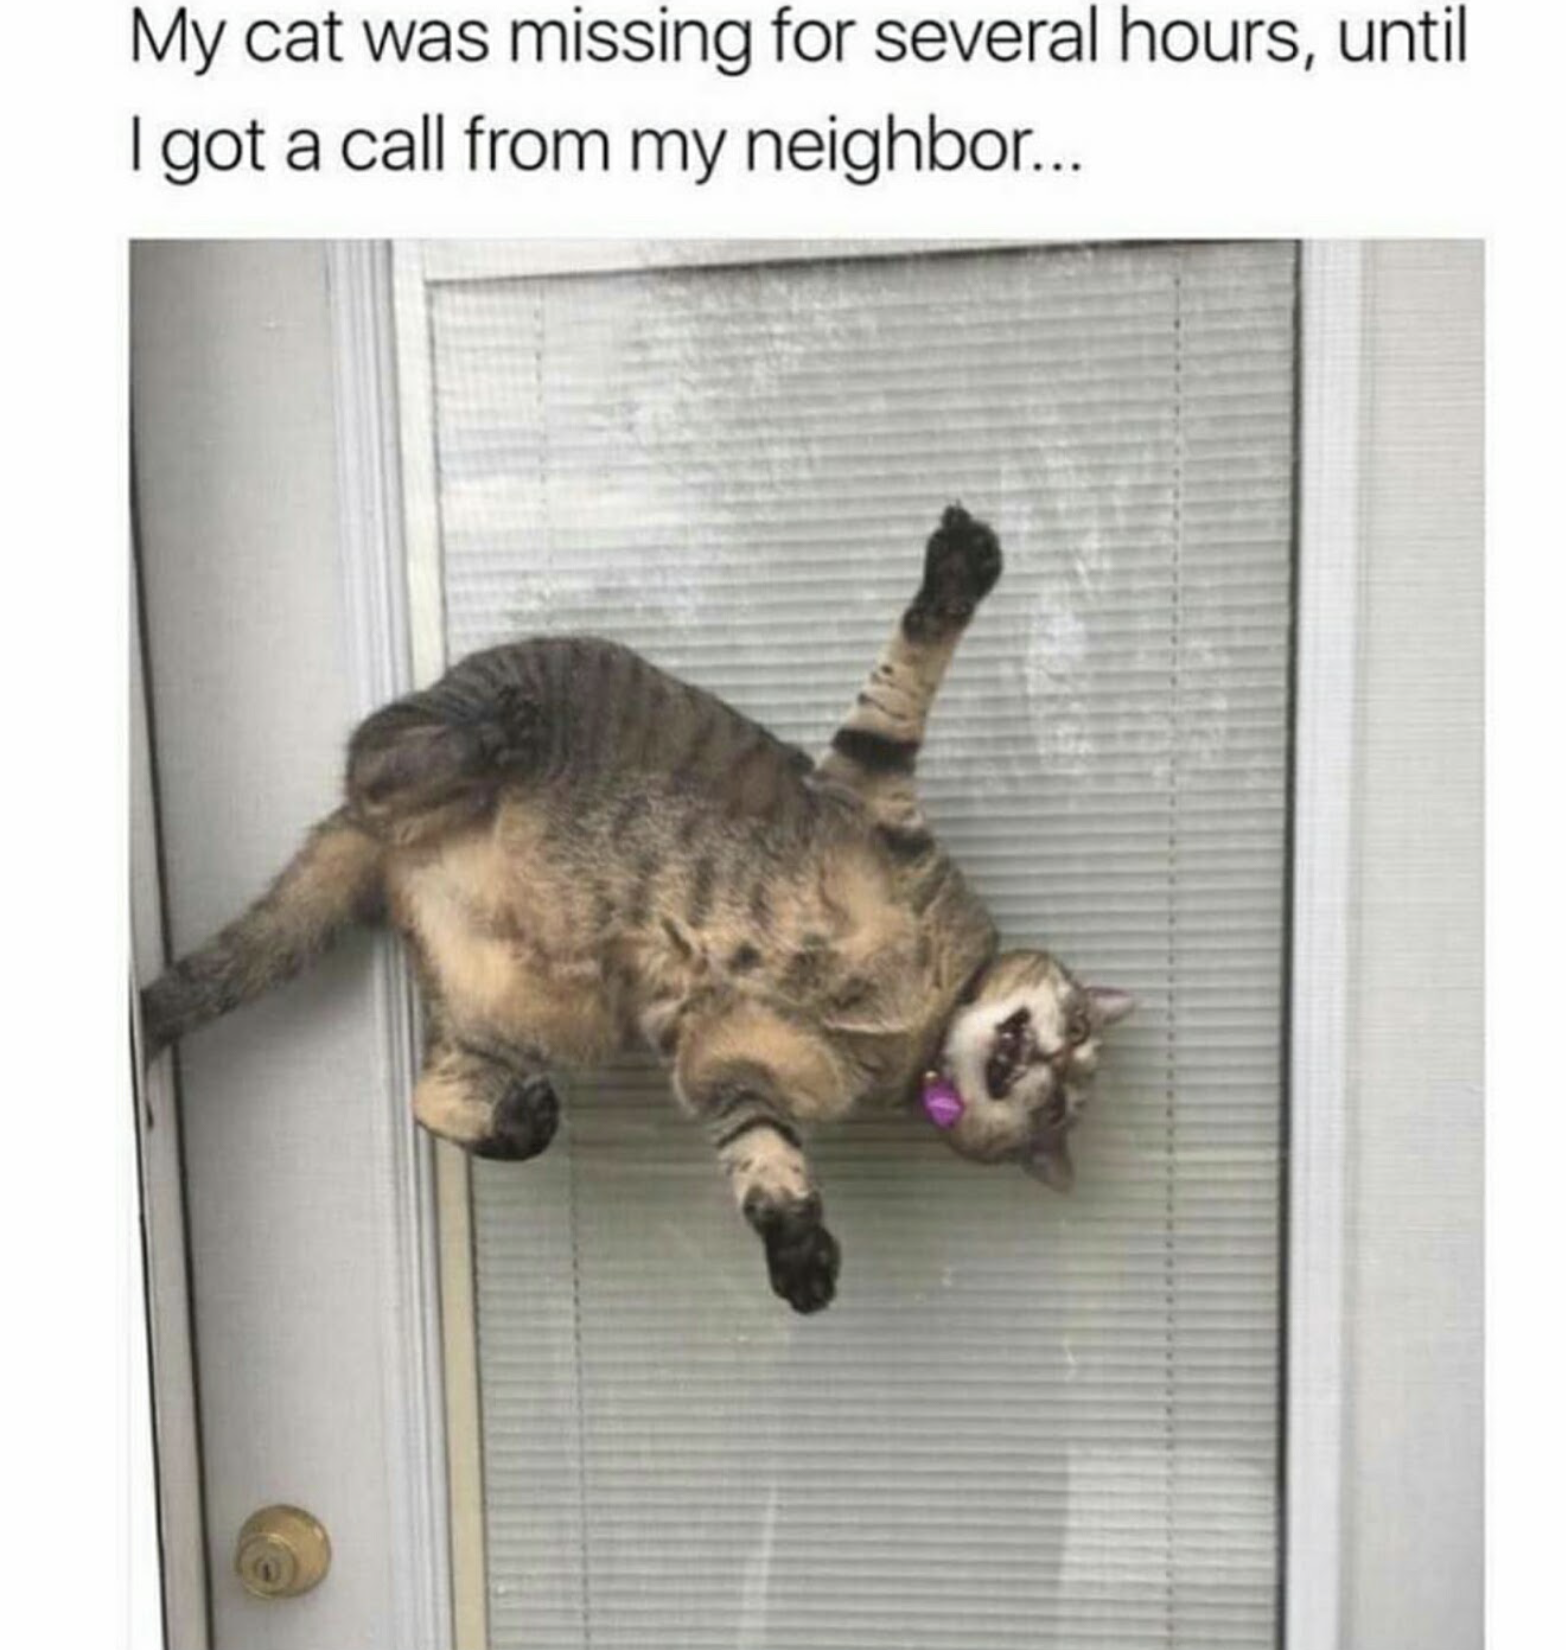 funny picture of cat that was previously missing 12 hours, with cat stuck between the screen door and regular door